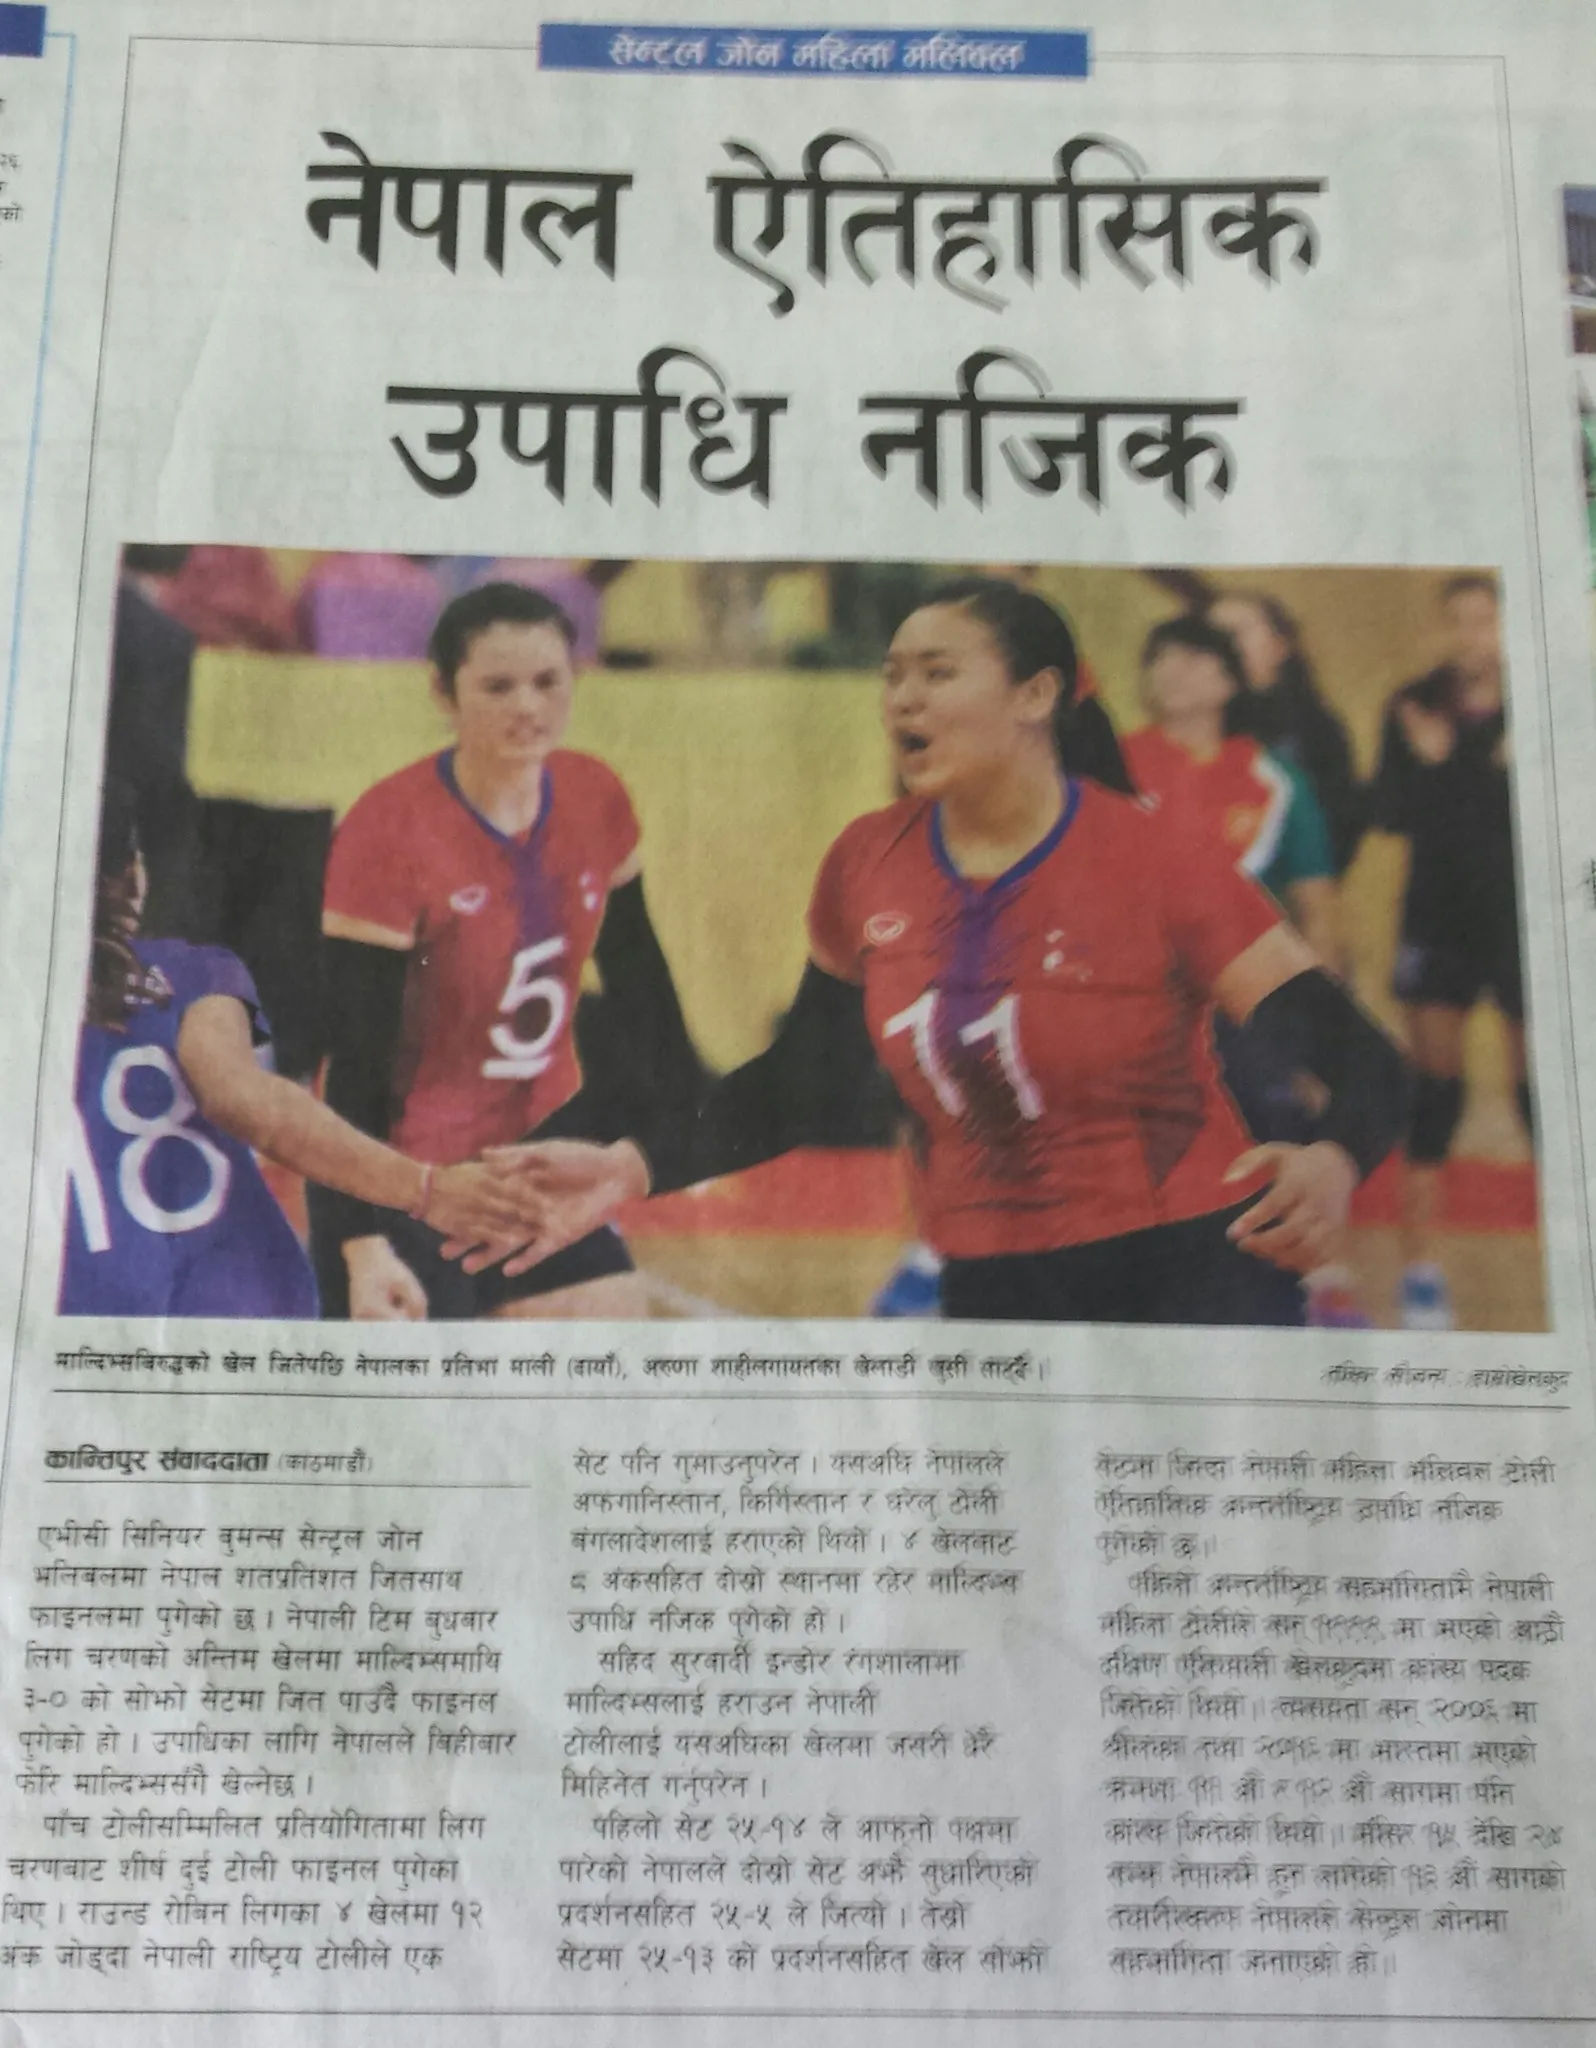 Nepal volleyball association featured photo